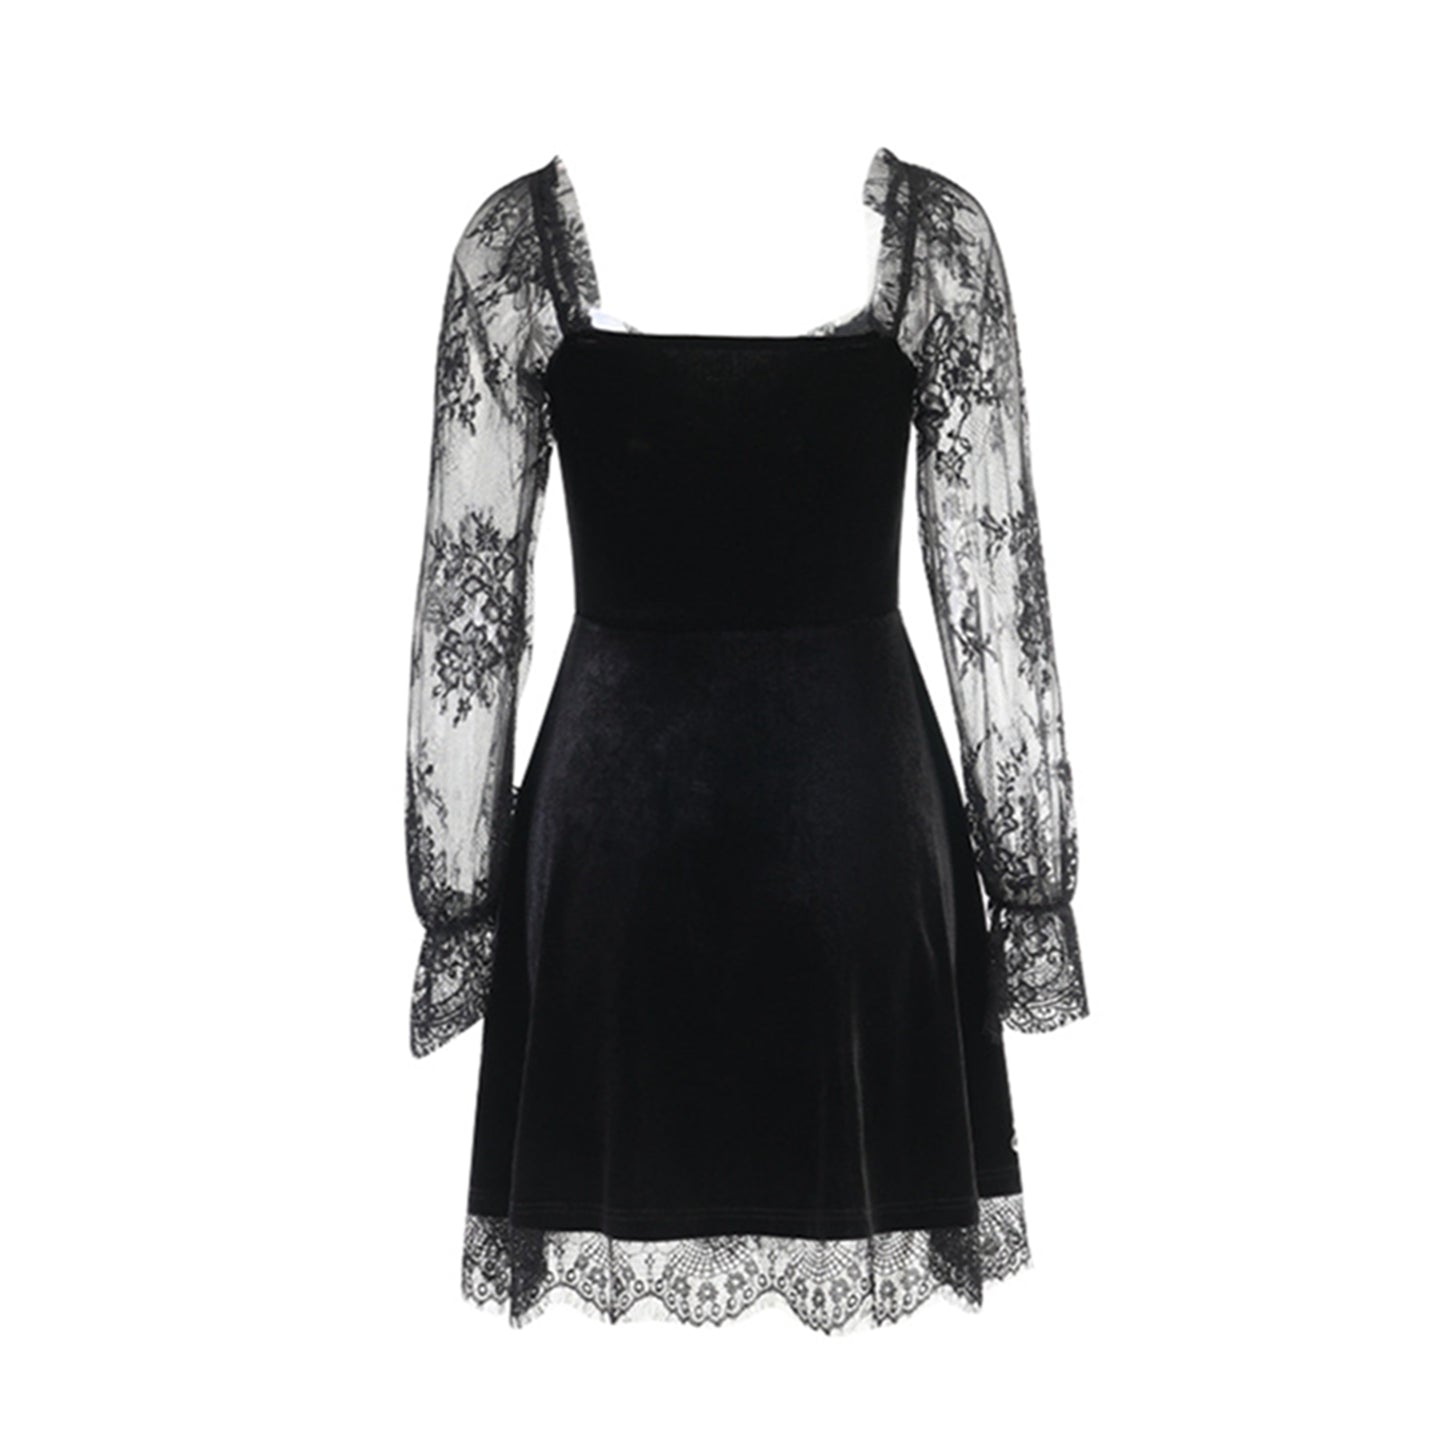 Lace Velvet A-Line Gothic Style Dress